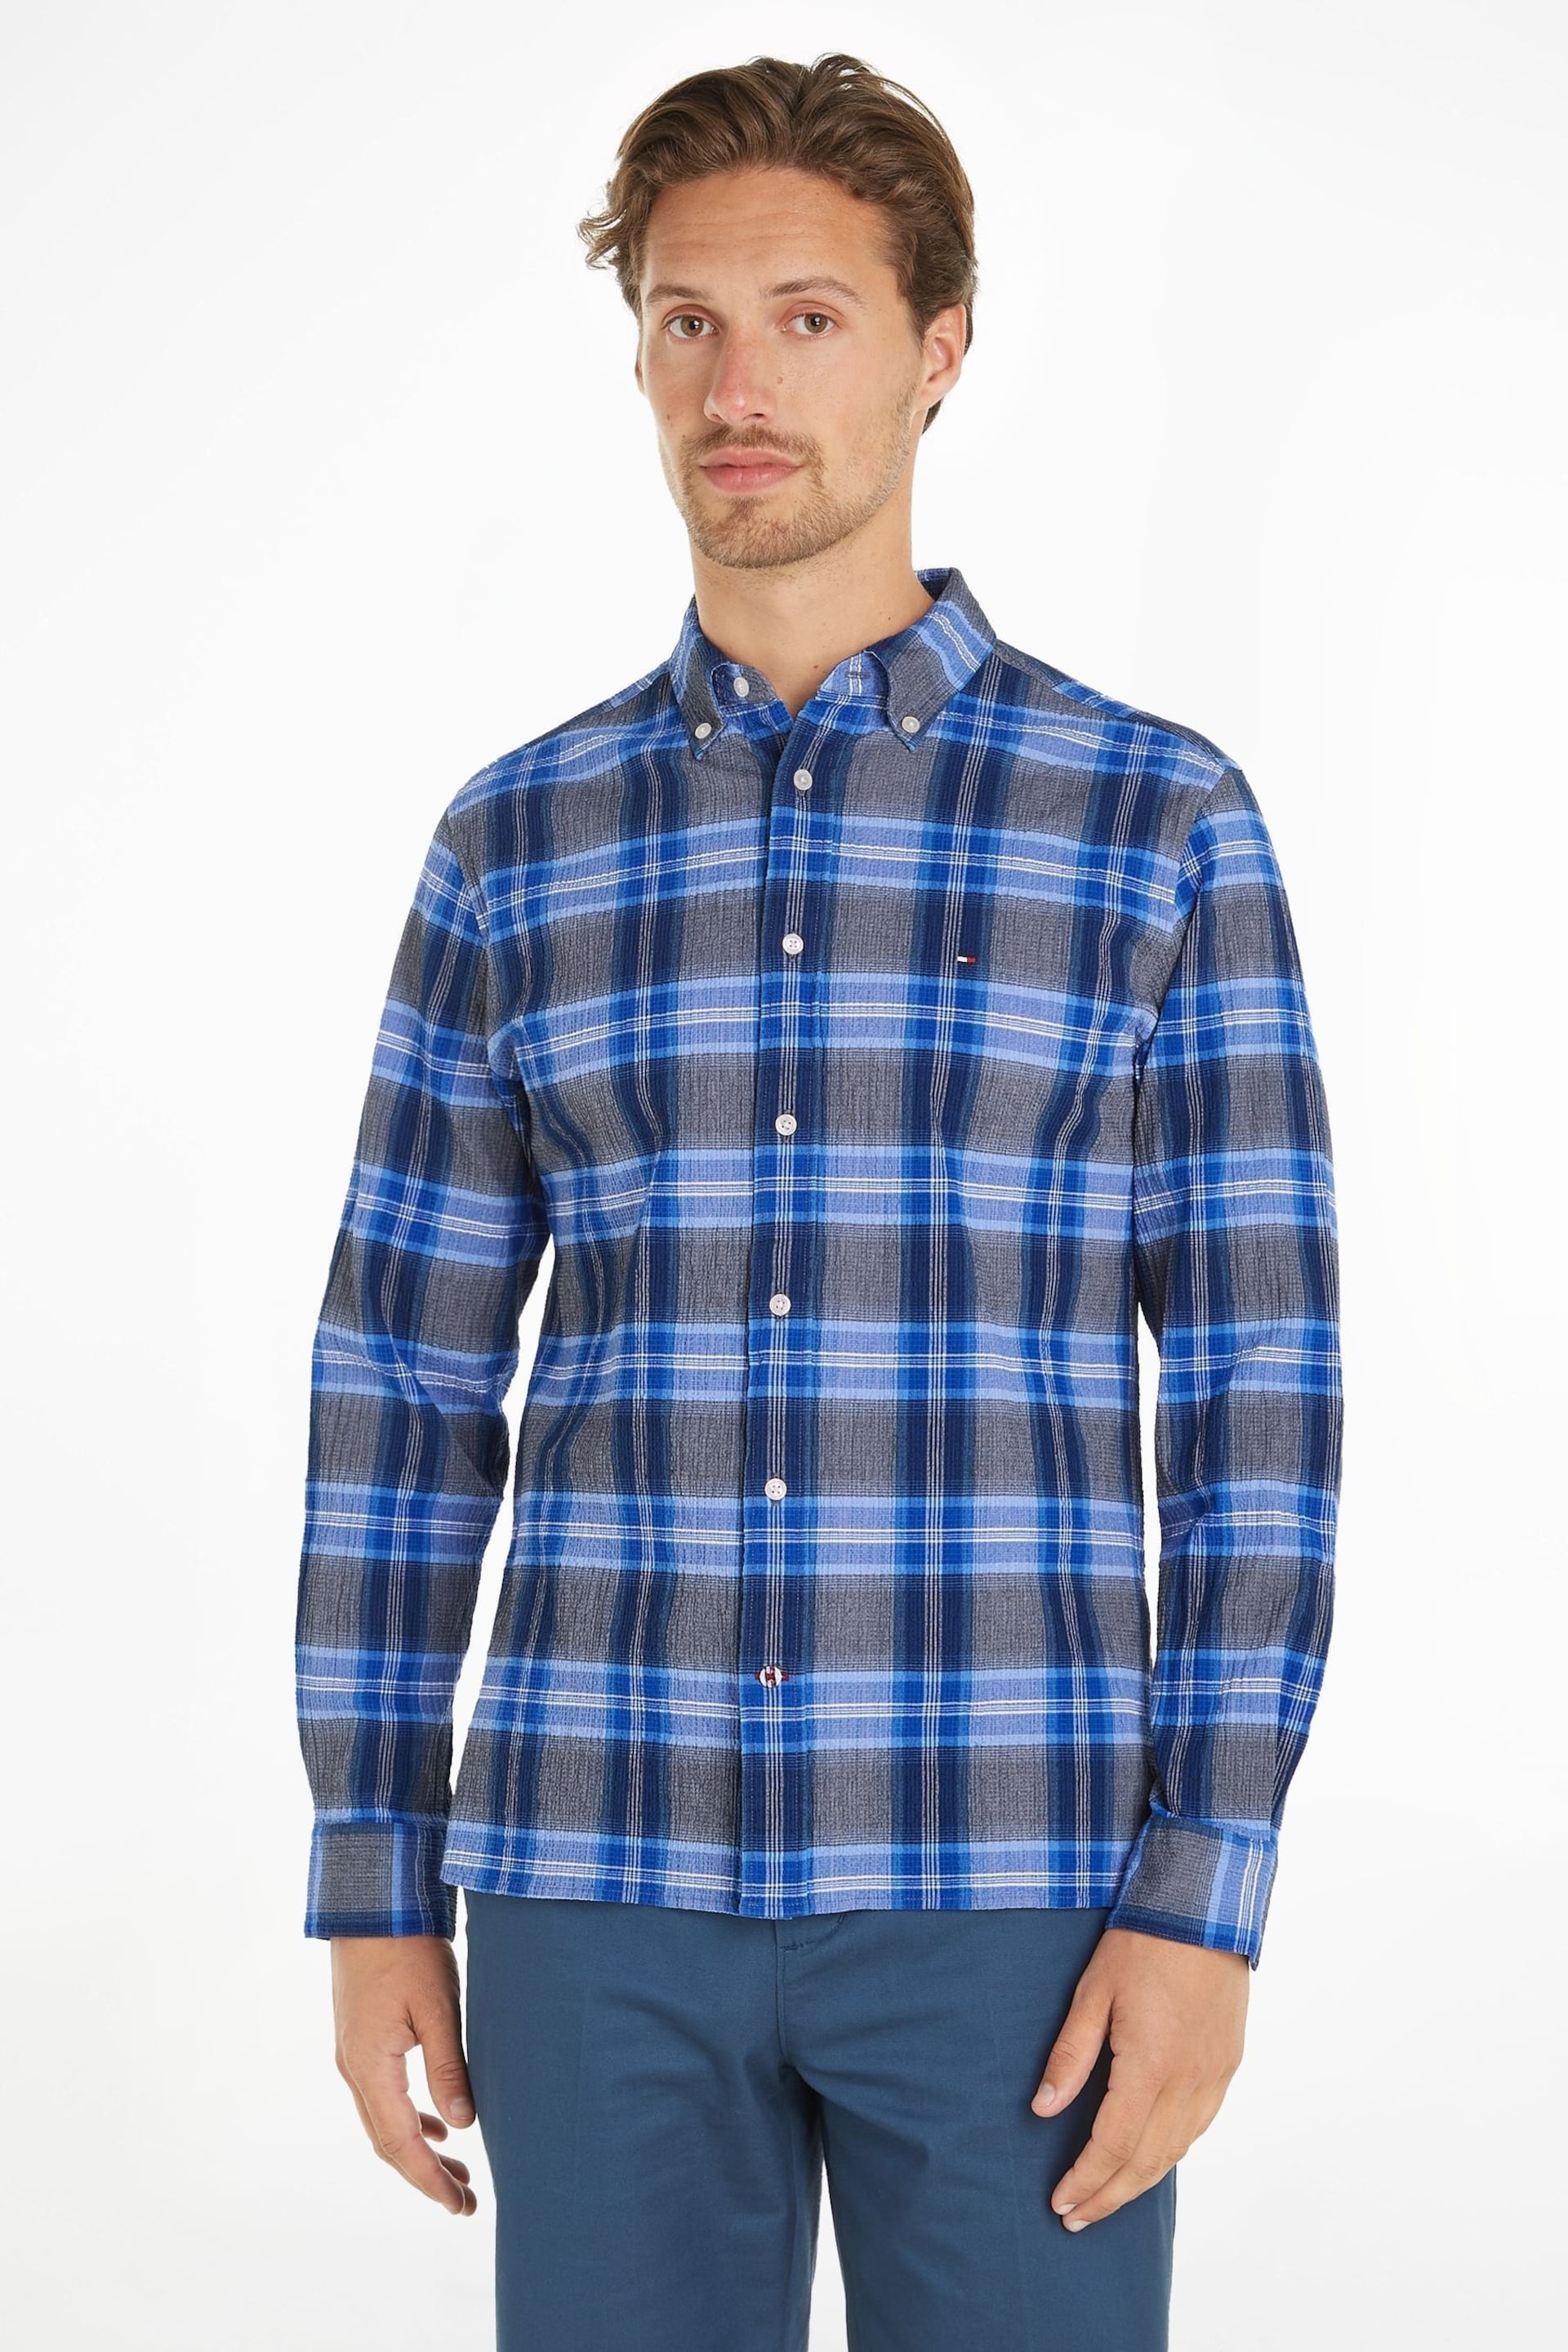 Tommy Hilfiger Blue Tartan Shirt - Image 1 of 6